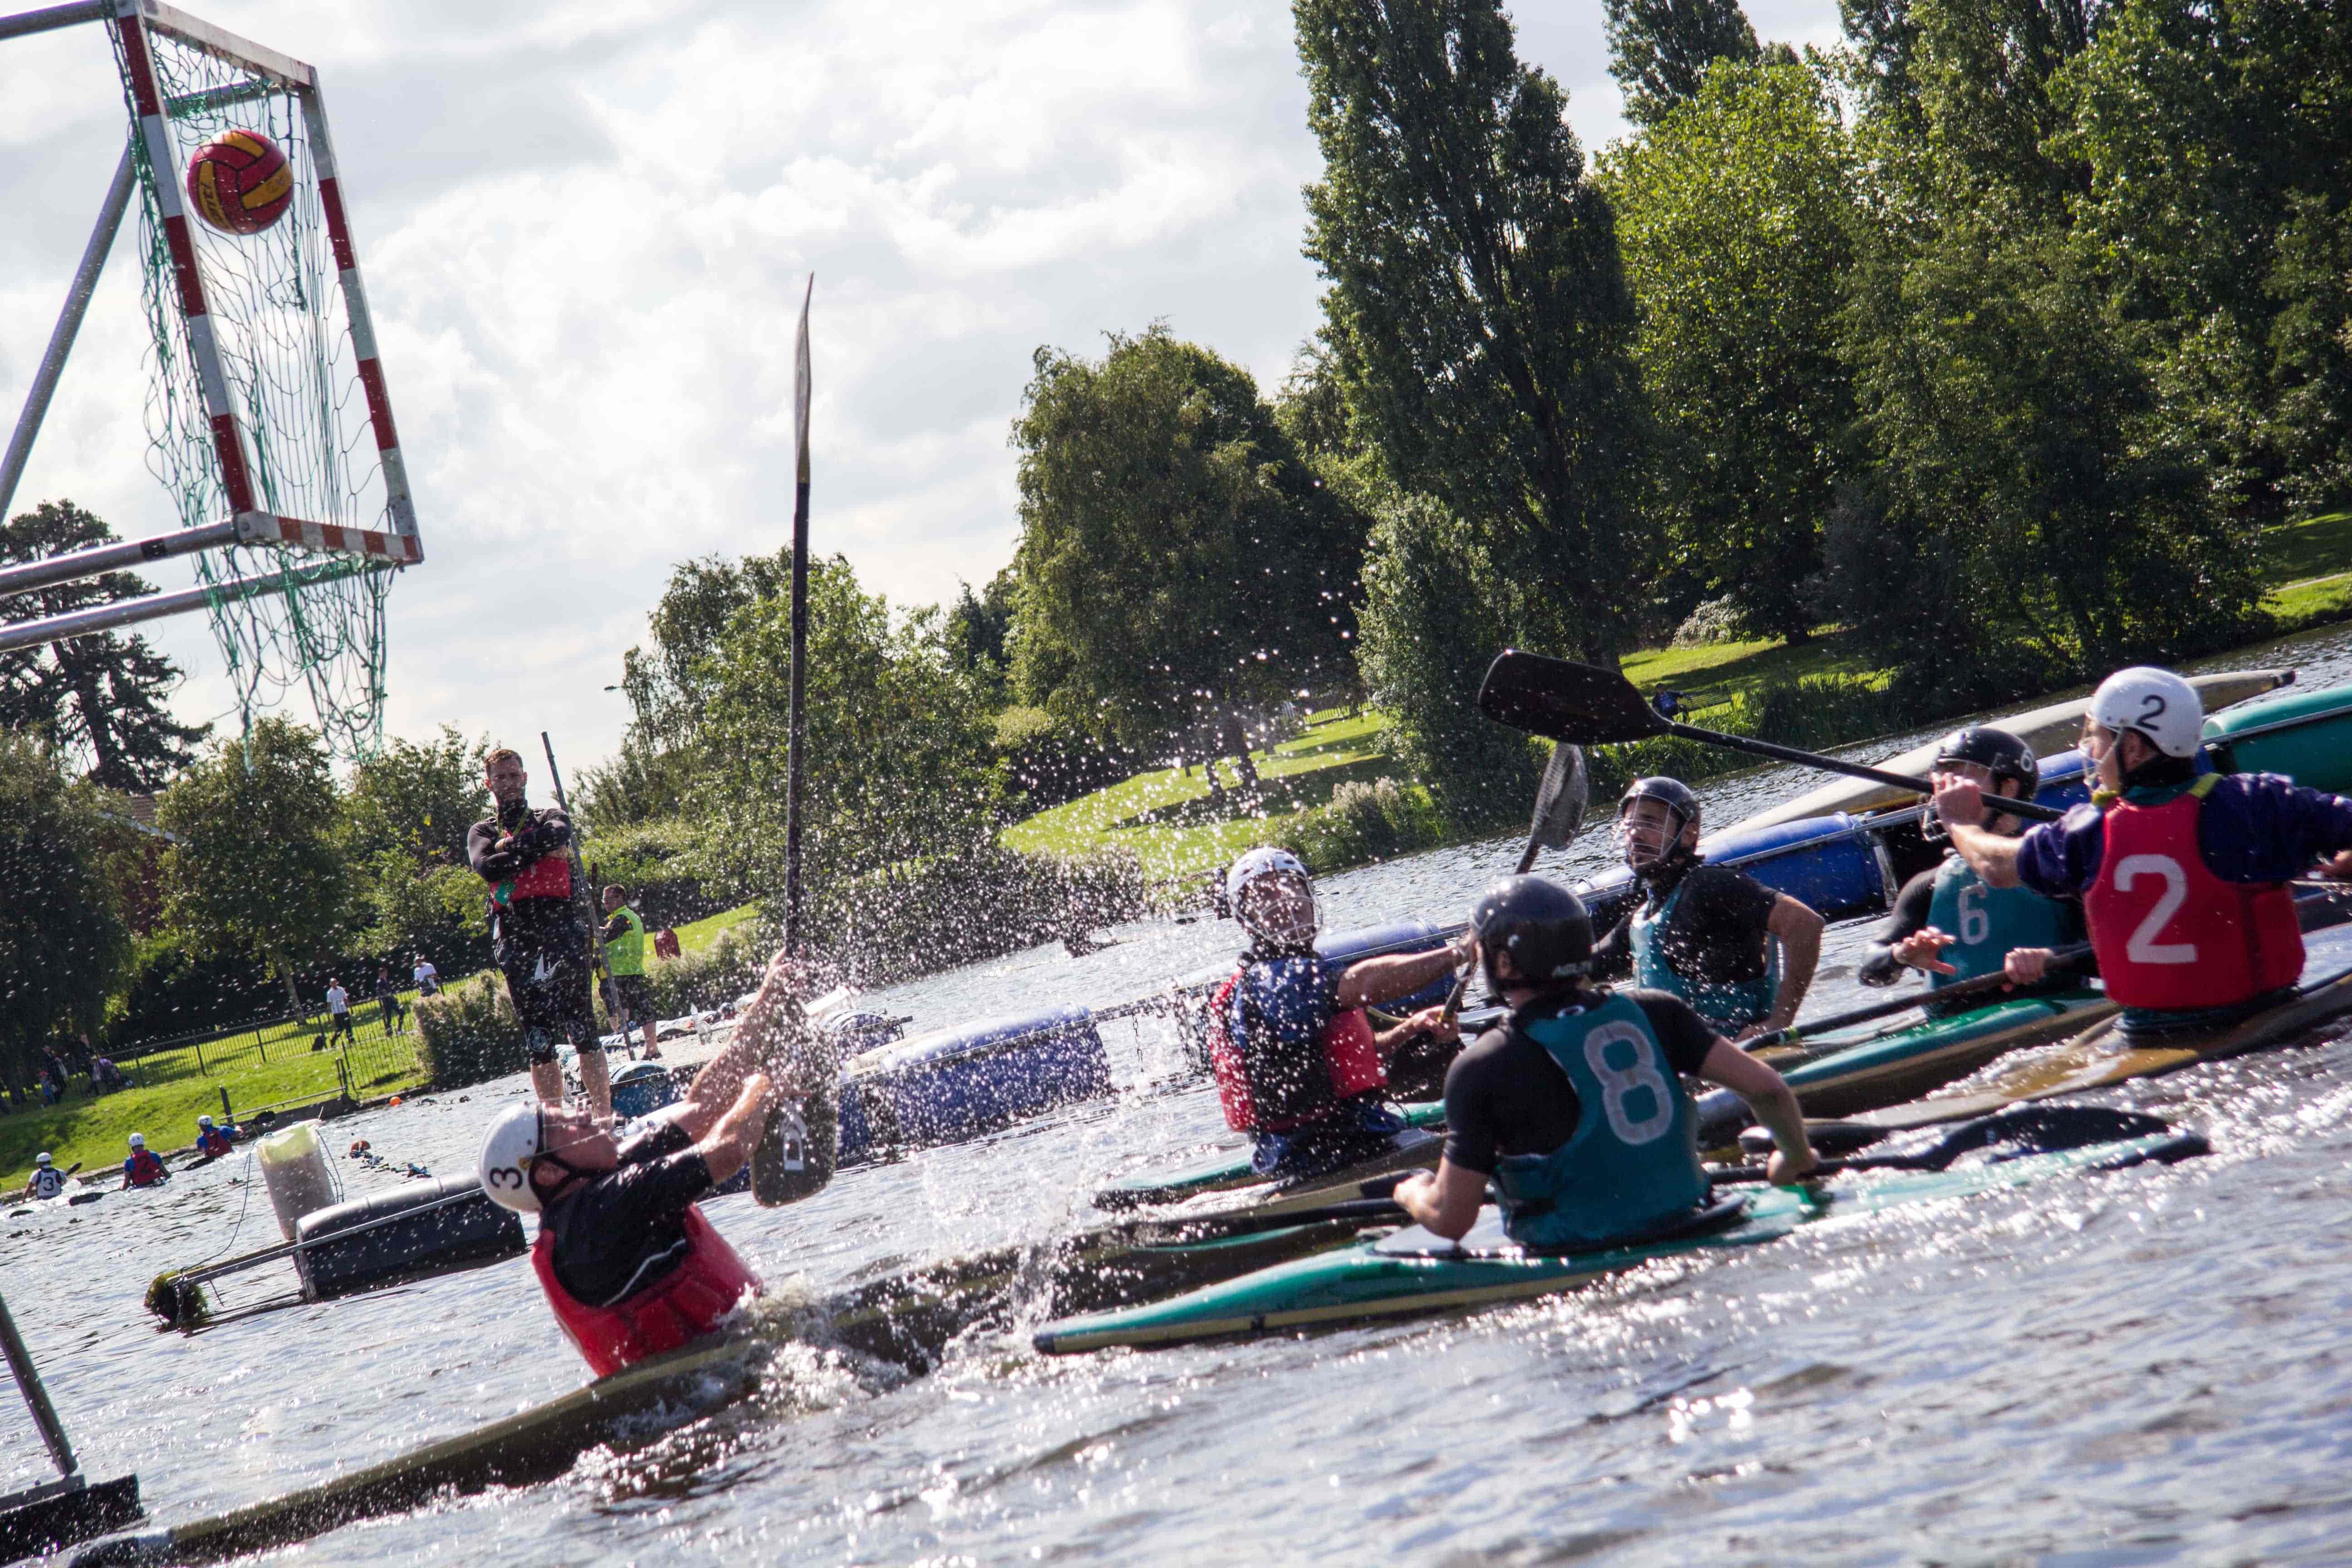 British Canoe Polo – The Kayaking Team Sport5184 x 3456